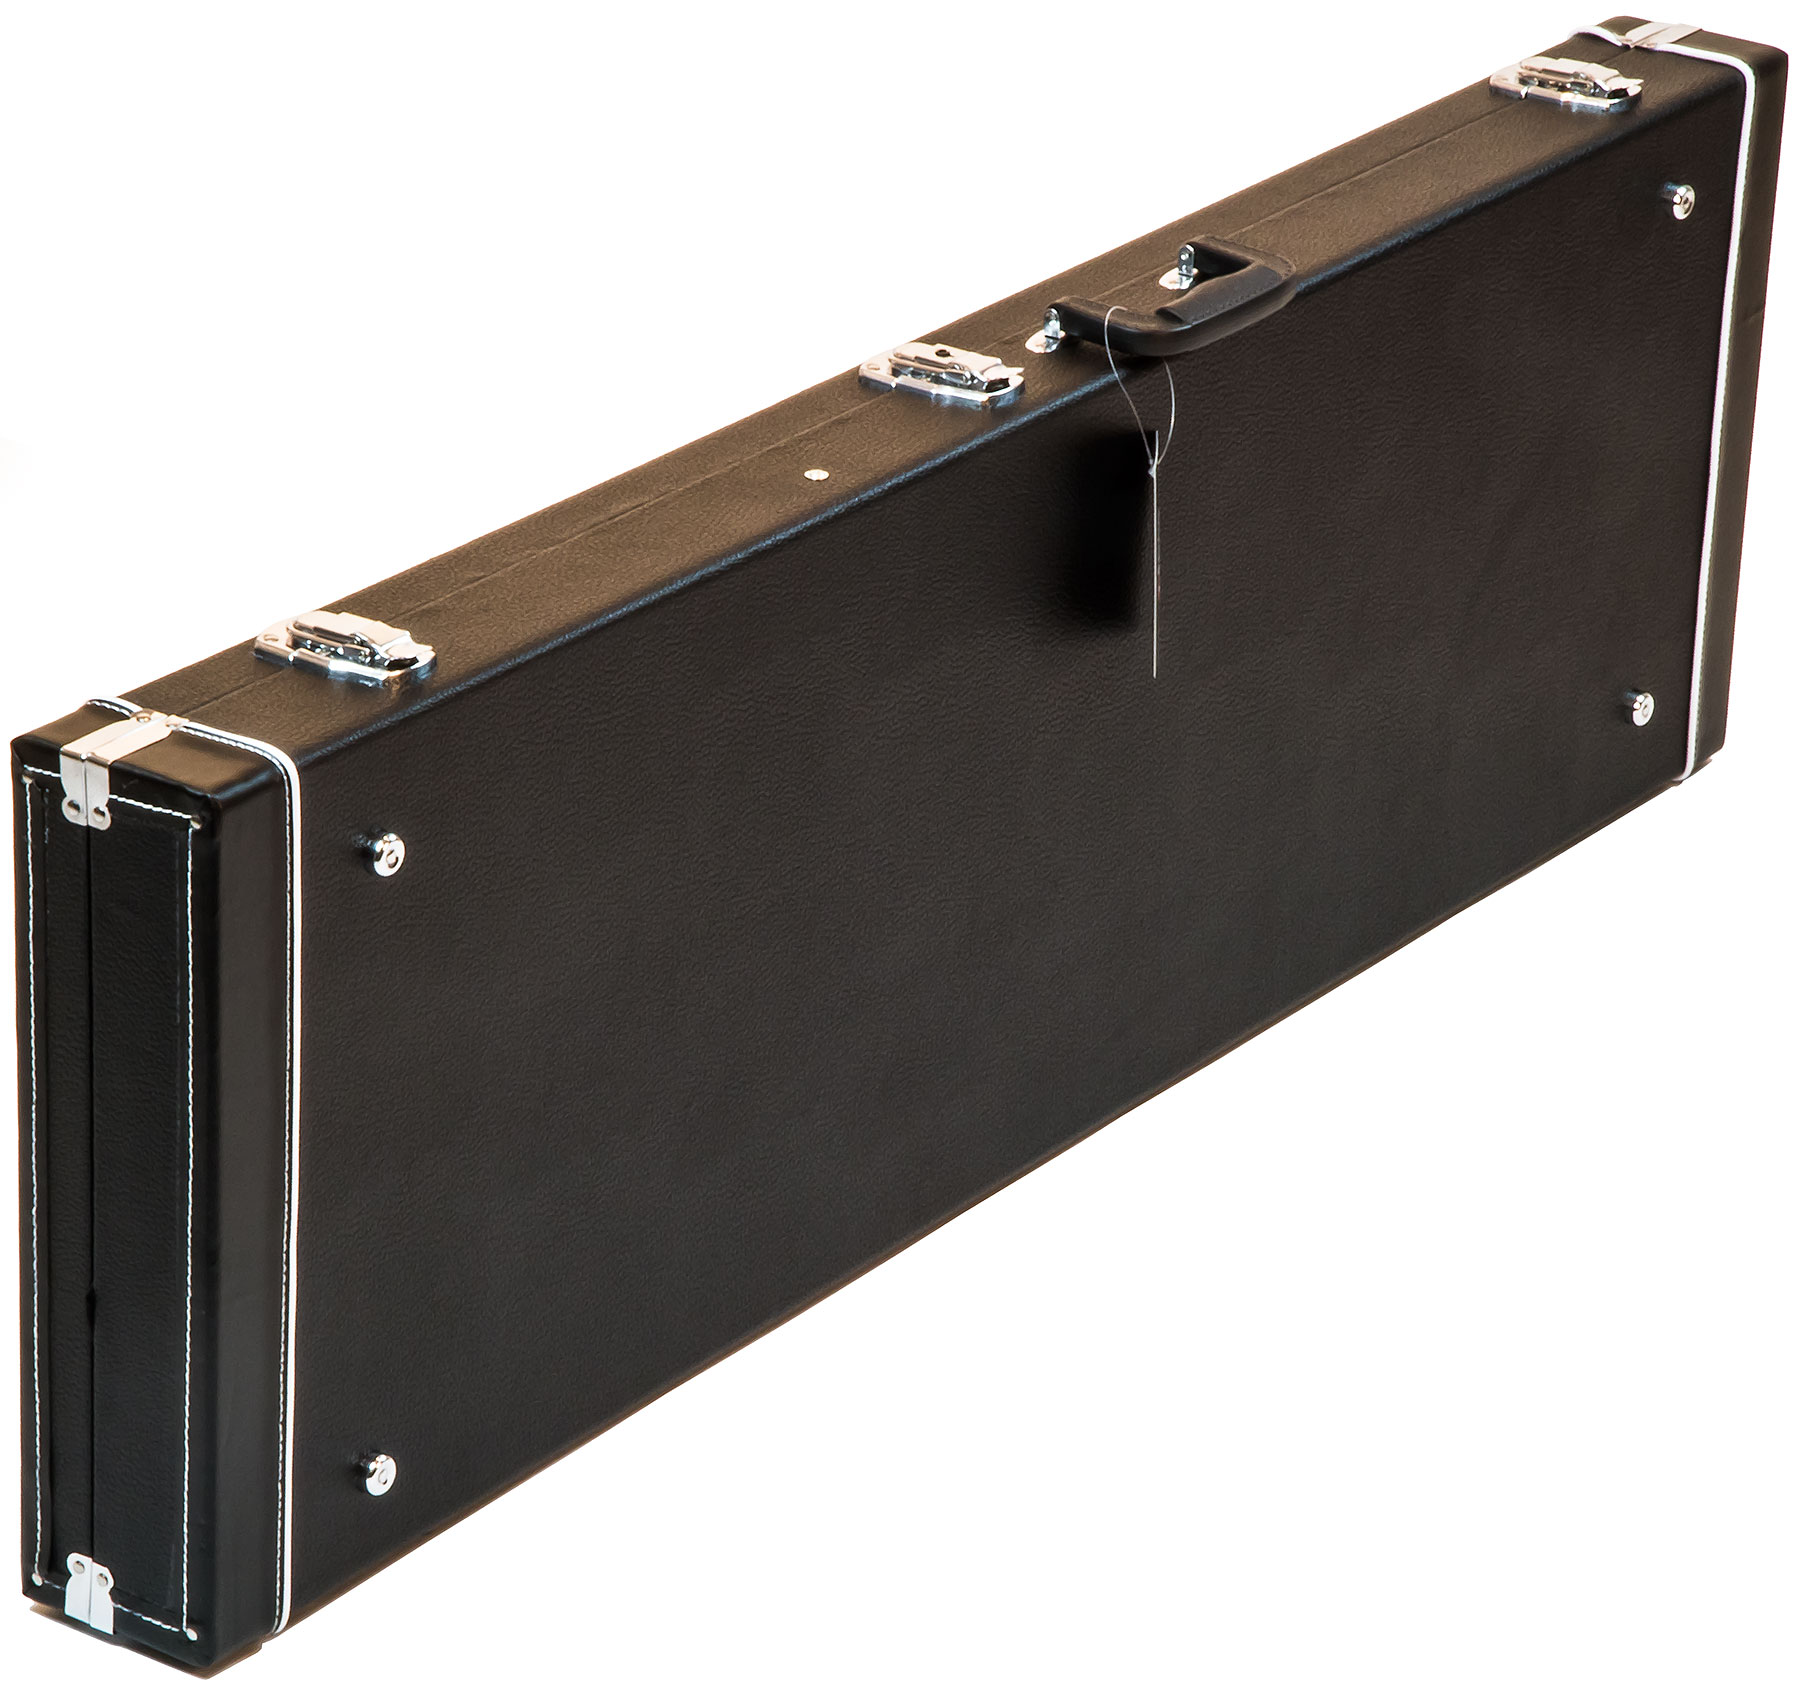 X-tone 1504 Standard Electrique Jazz/precision Bass Rectangulaire Black - Electric bass case - Variation 1